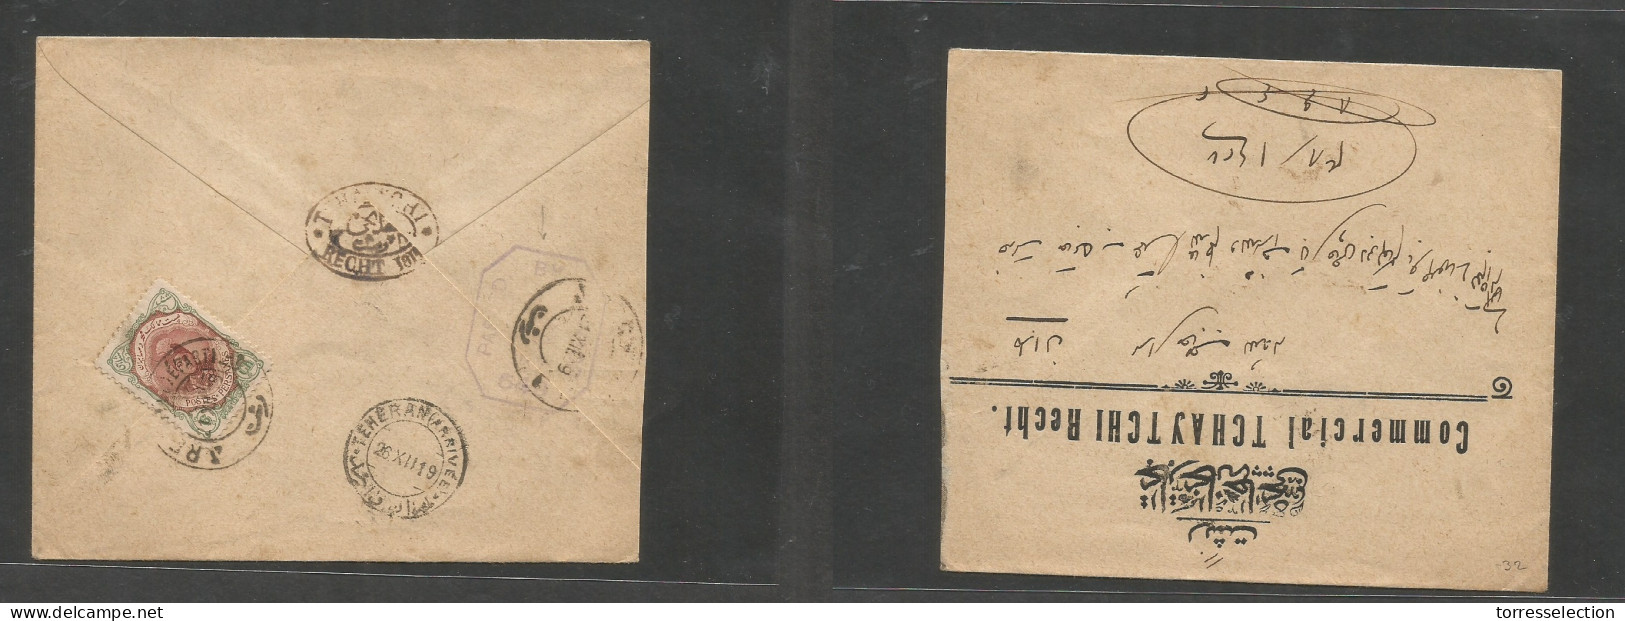 PERSIA. 1919 (21 Dec) Recht - Teheran (26 Dec) Comercial Single Fkd 6d On Reverse Of Envelope, Tied Cds + Transited + Br - Iran